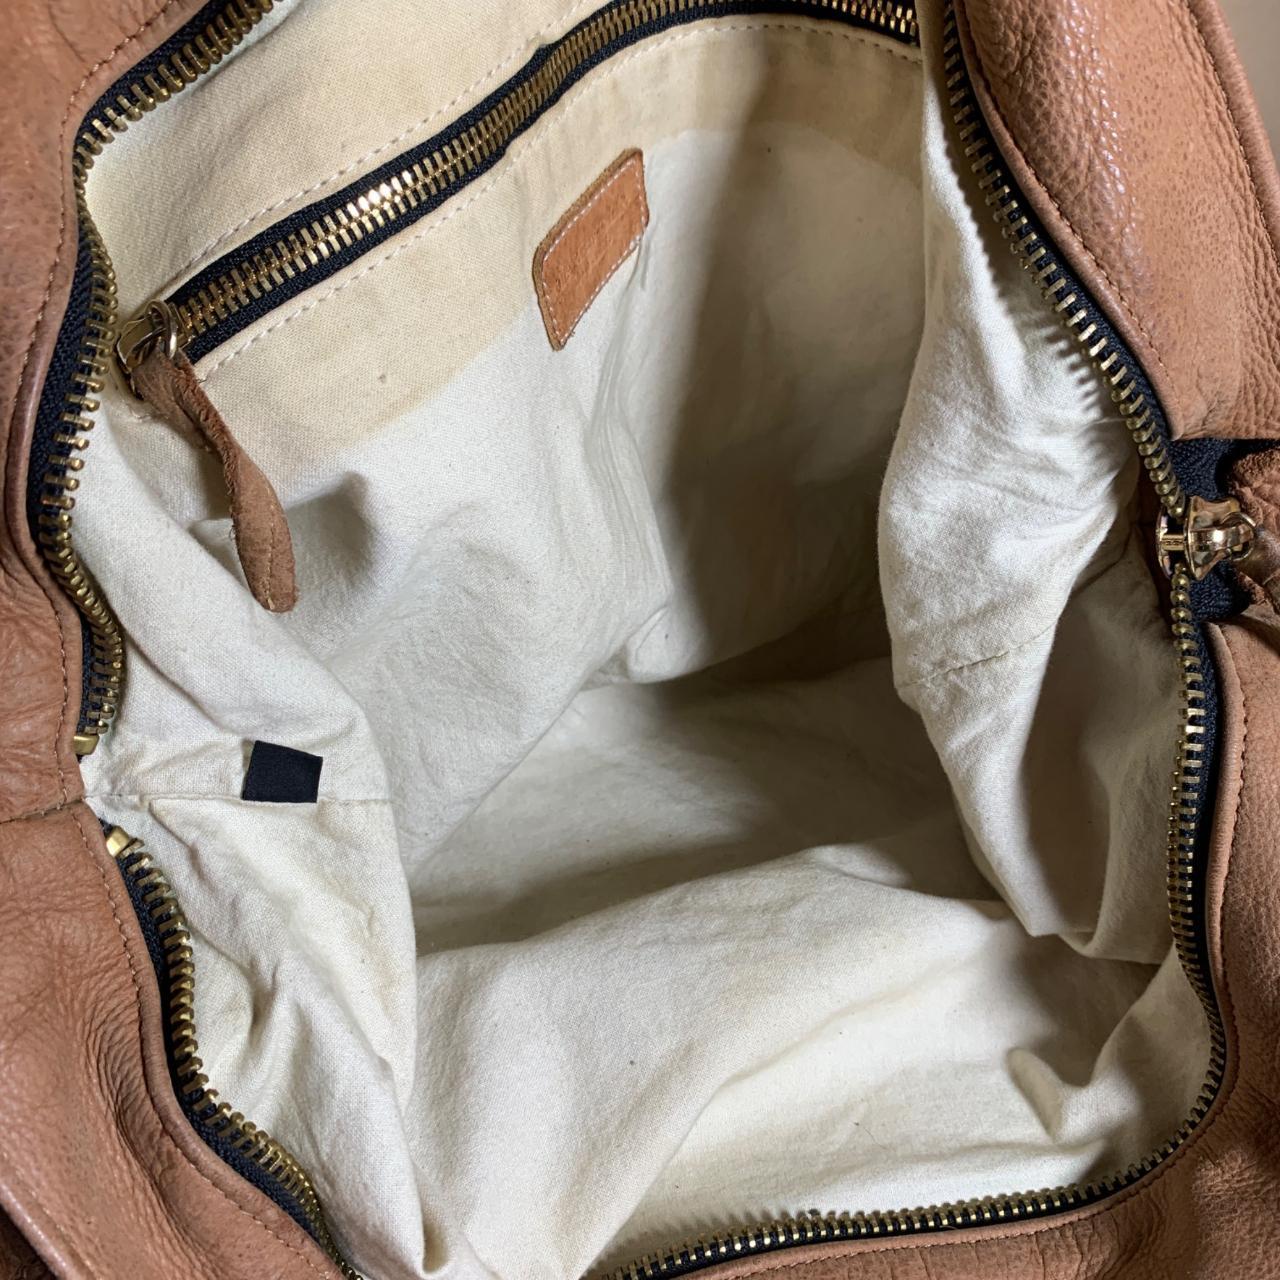 Clare Vivier classic Messenger bag with top handles - Depop